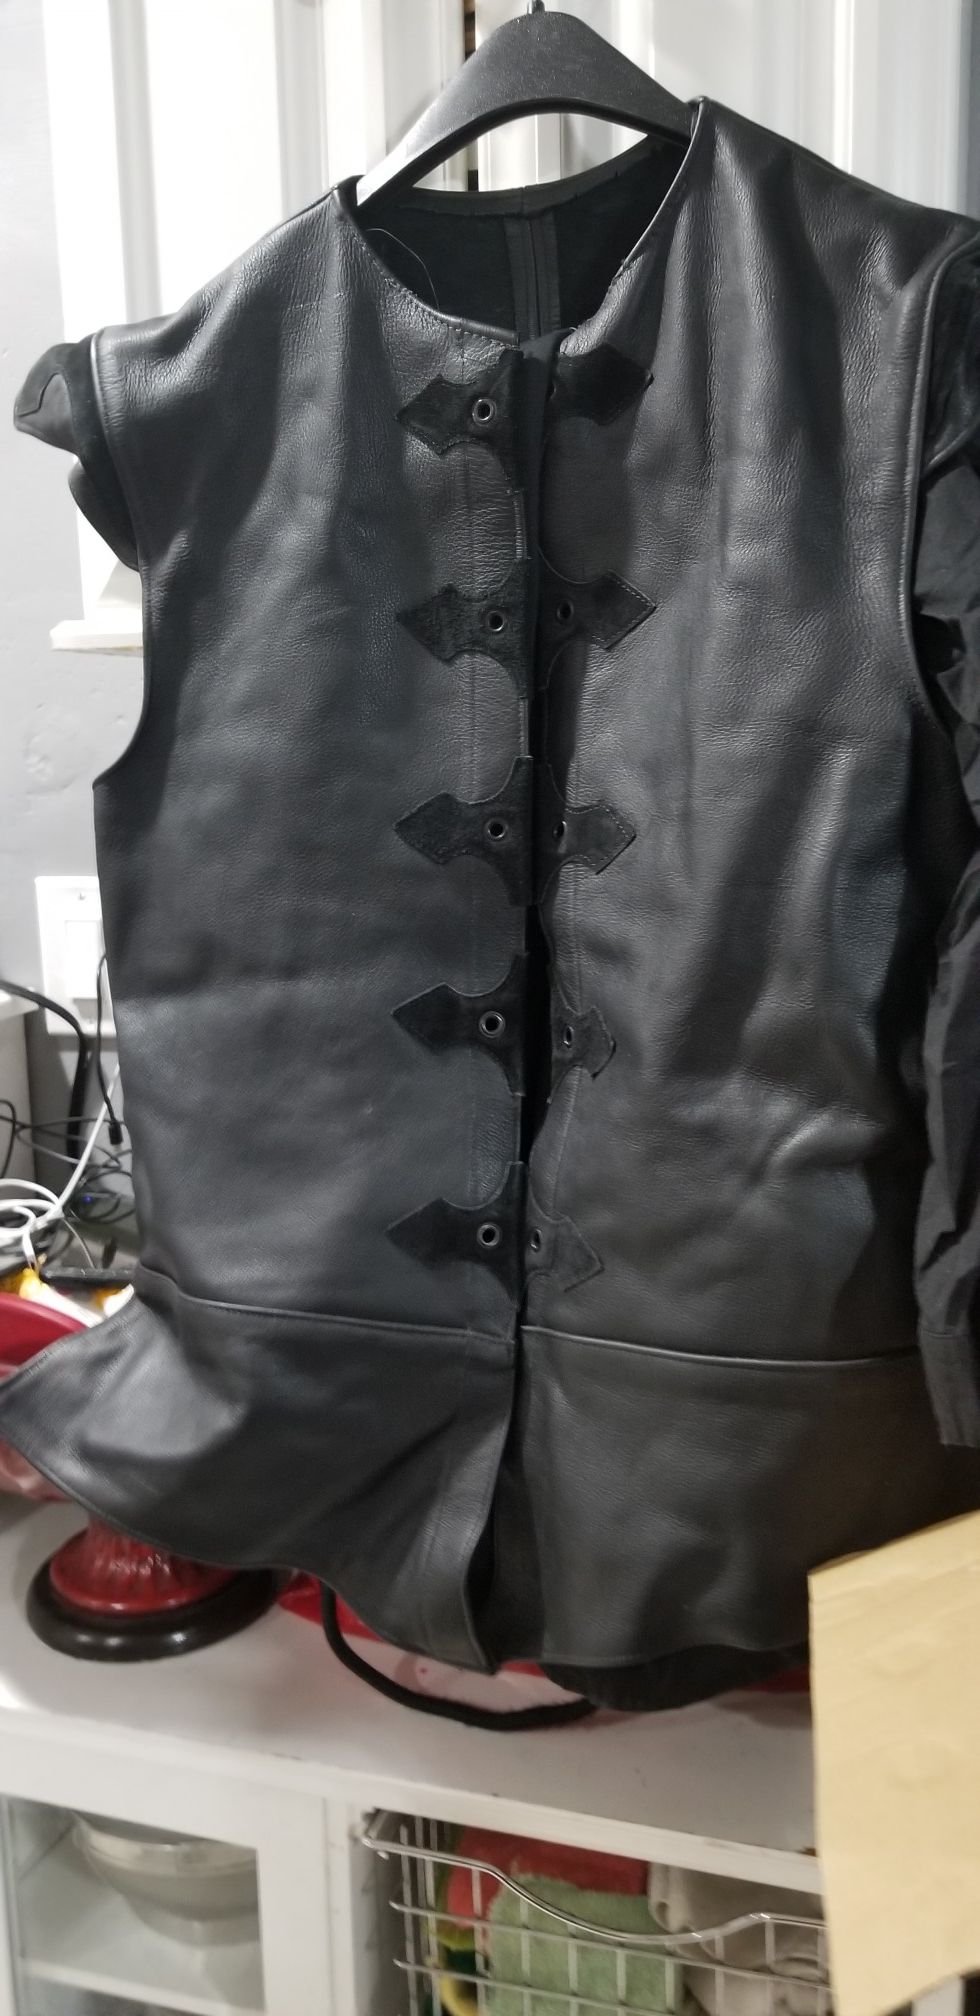 Men's leather vest custom made at the Renaissance Festival